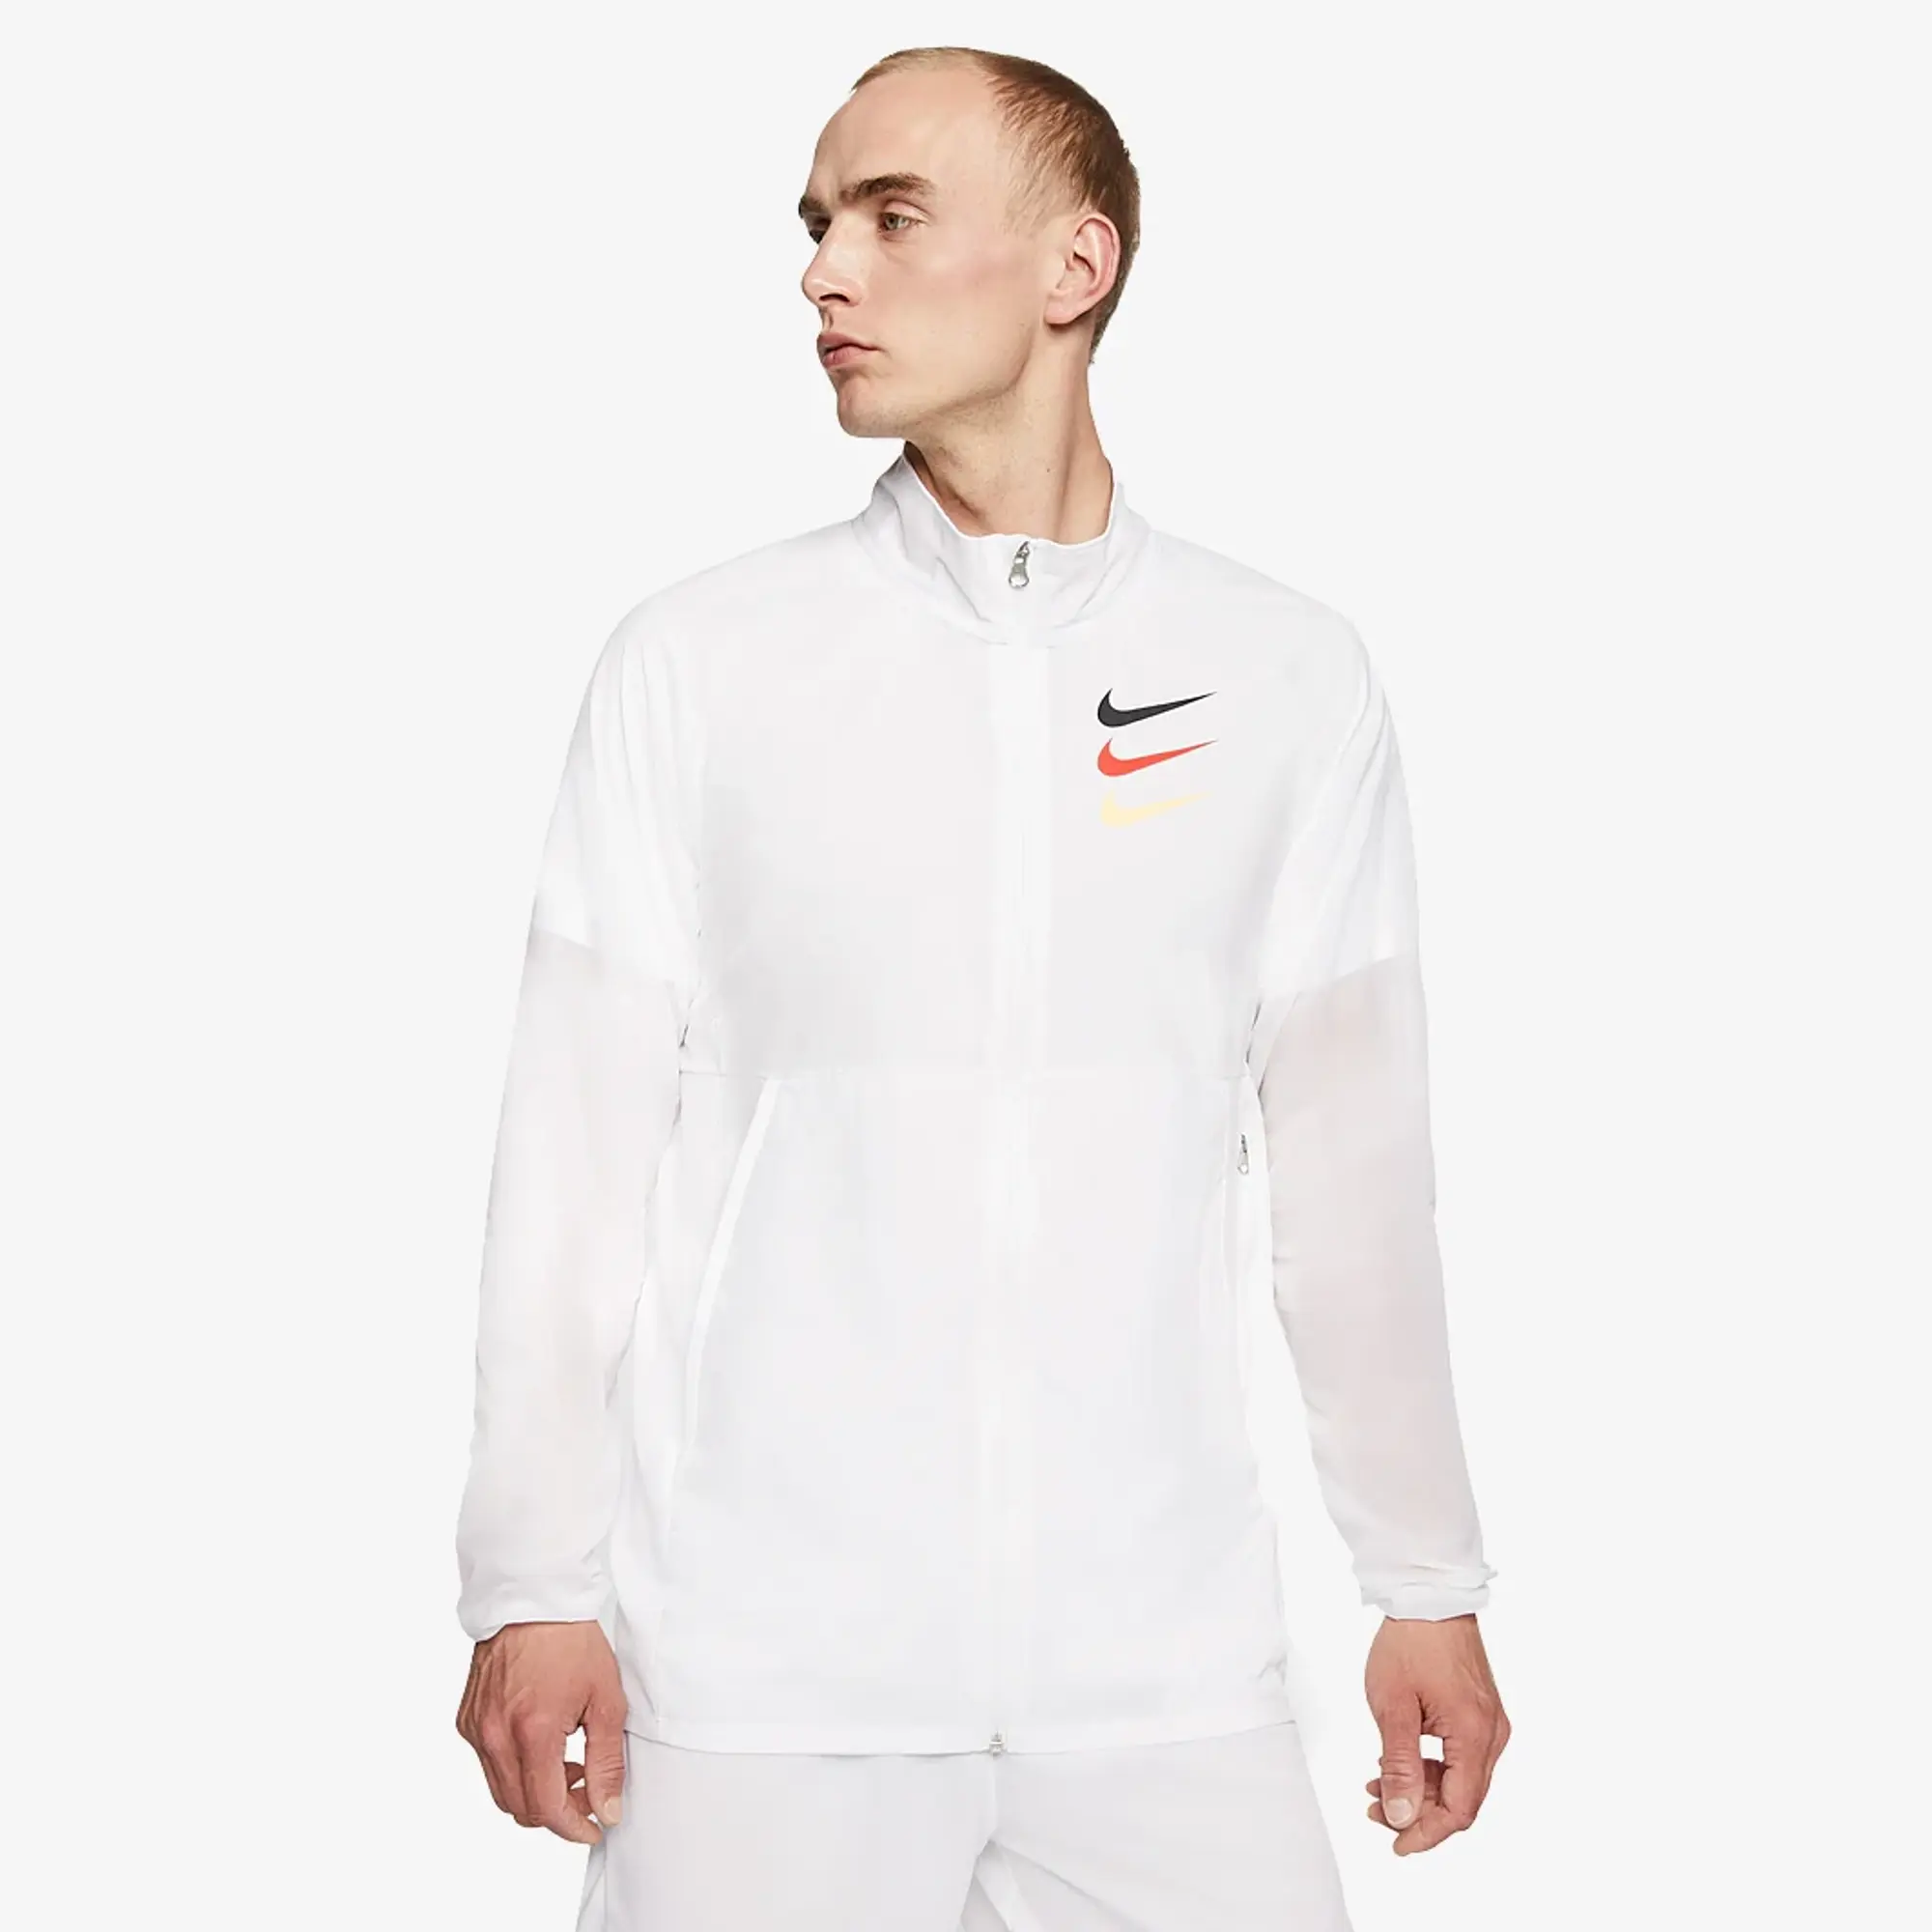 Nike Academy Football Jacket Mens - White